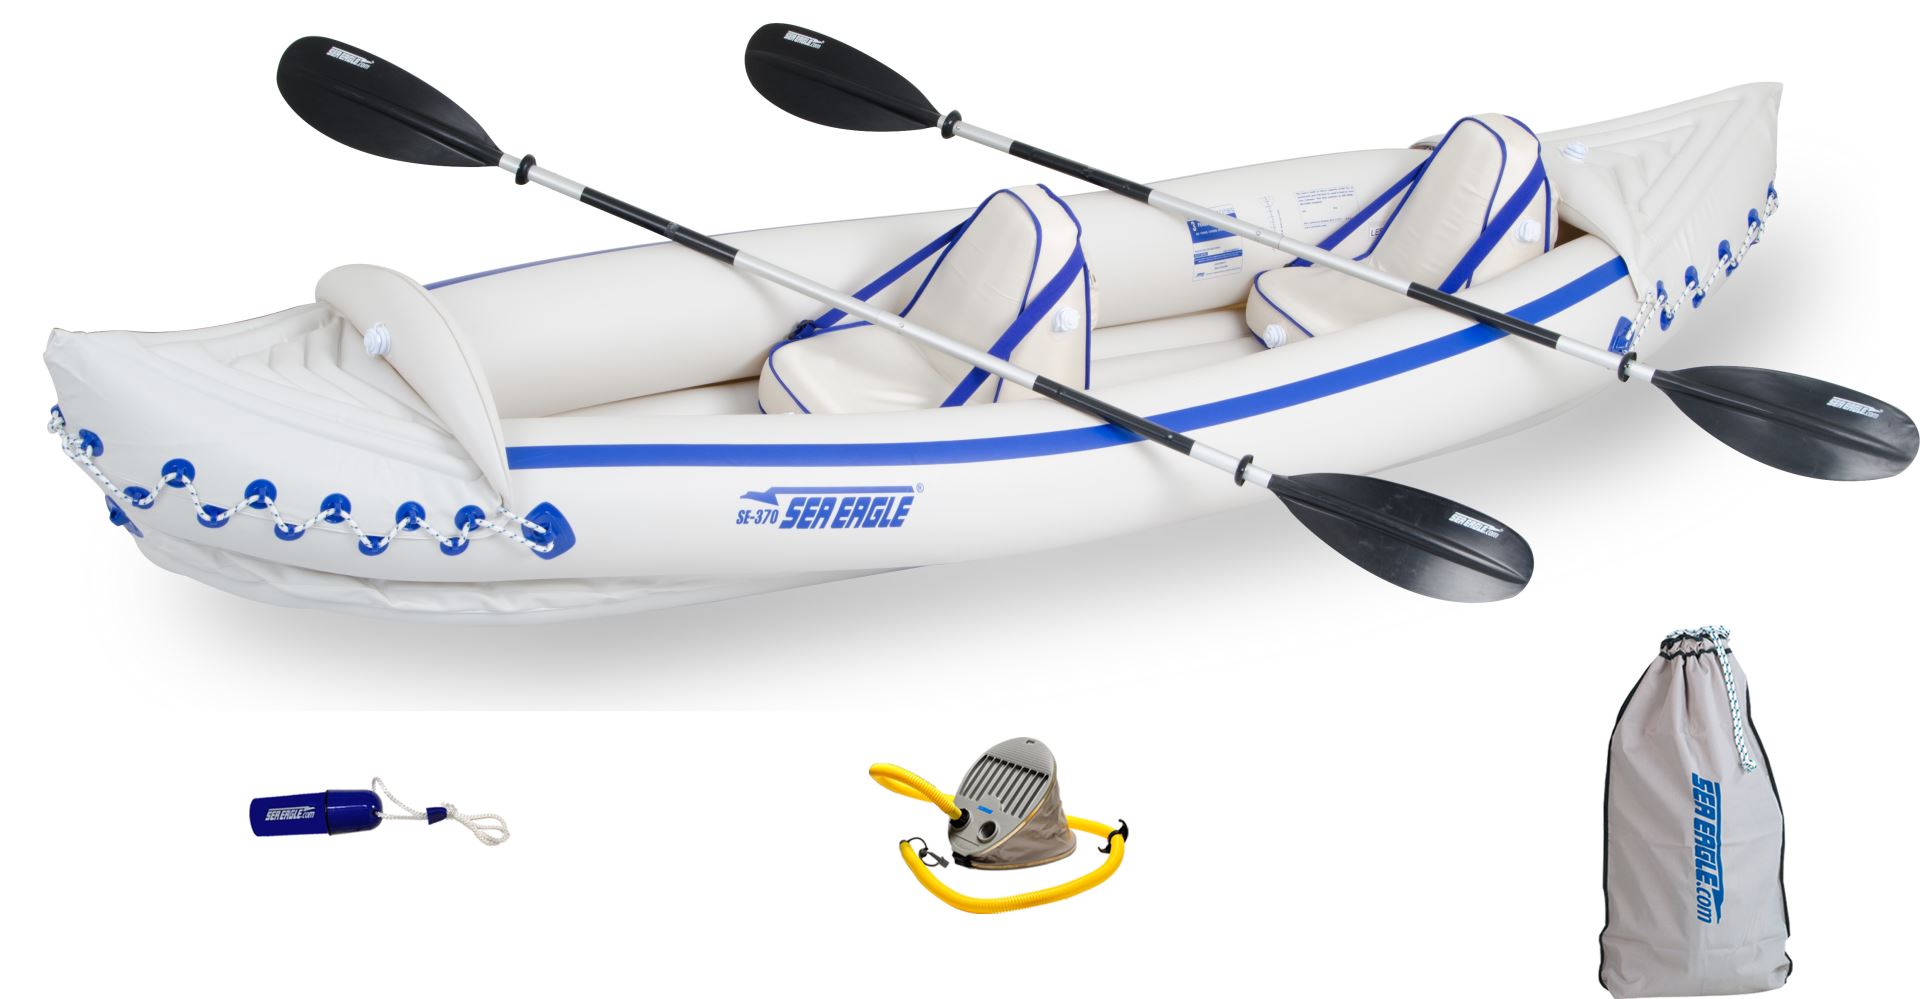 SEA EAGLE 370 Professional 3 Person Inflatable Sport Kayak Canoe Boat Open Box 